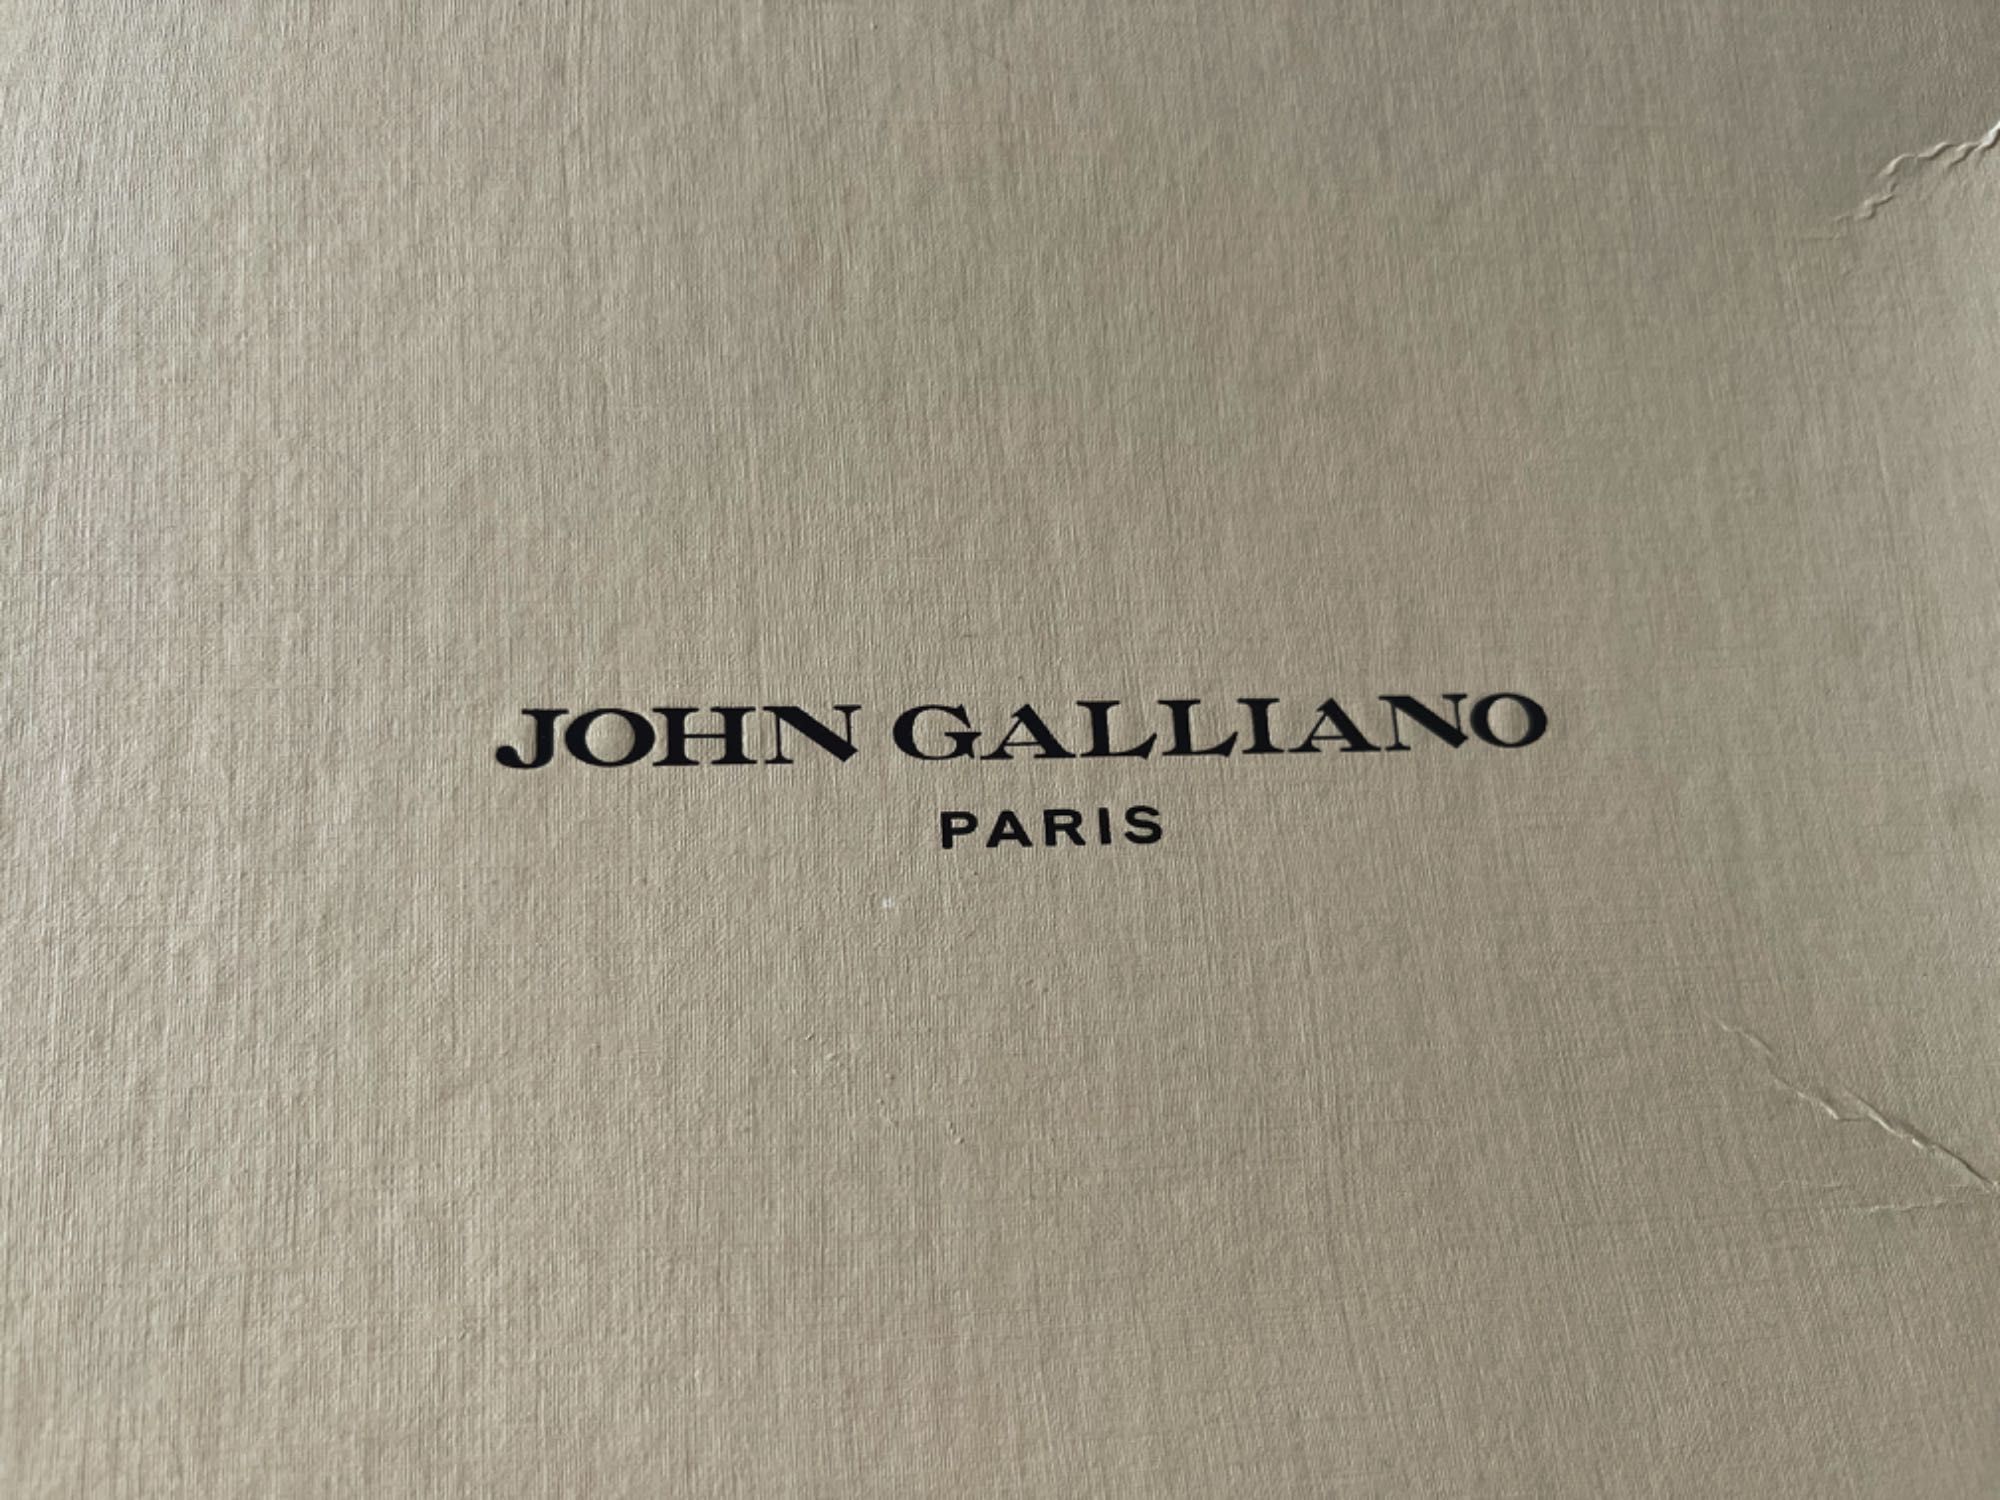 Botine din Piele Naturală, Brand John Galliano